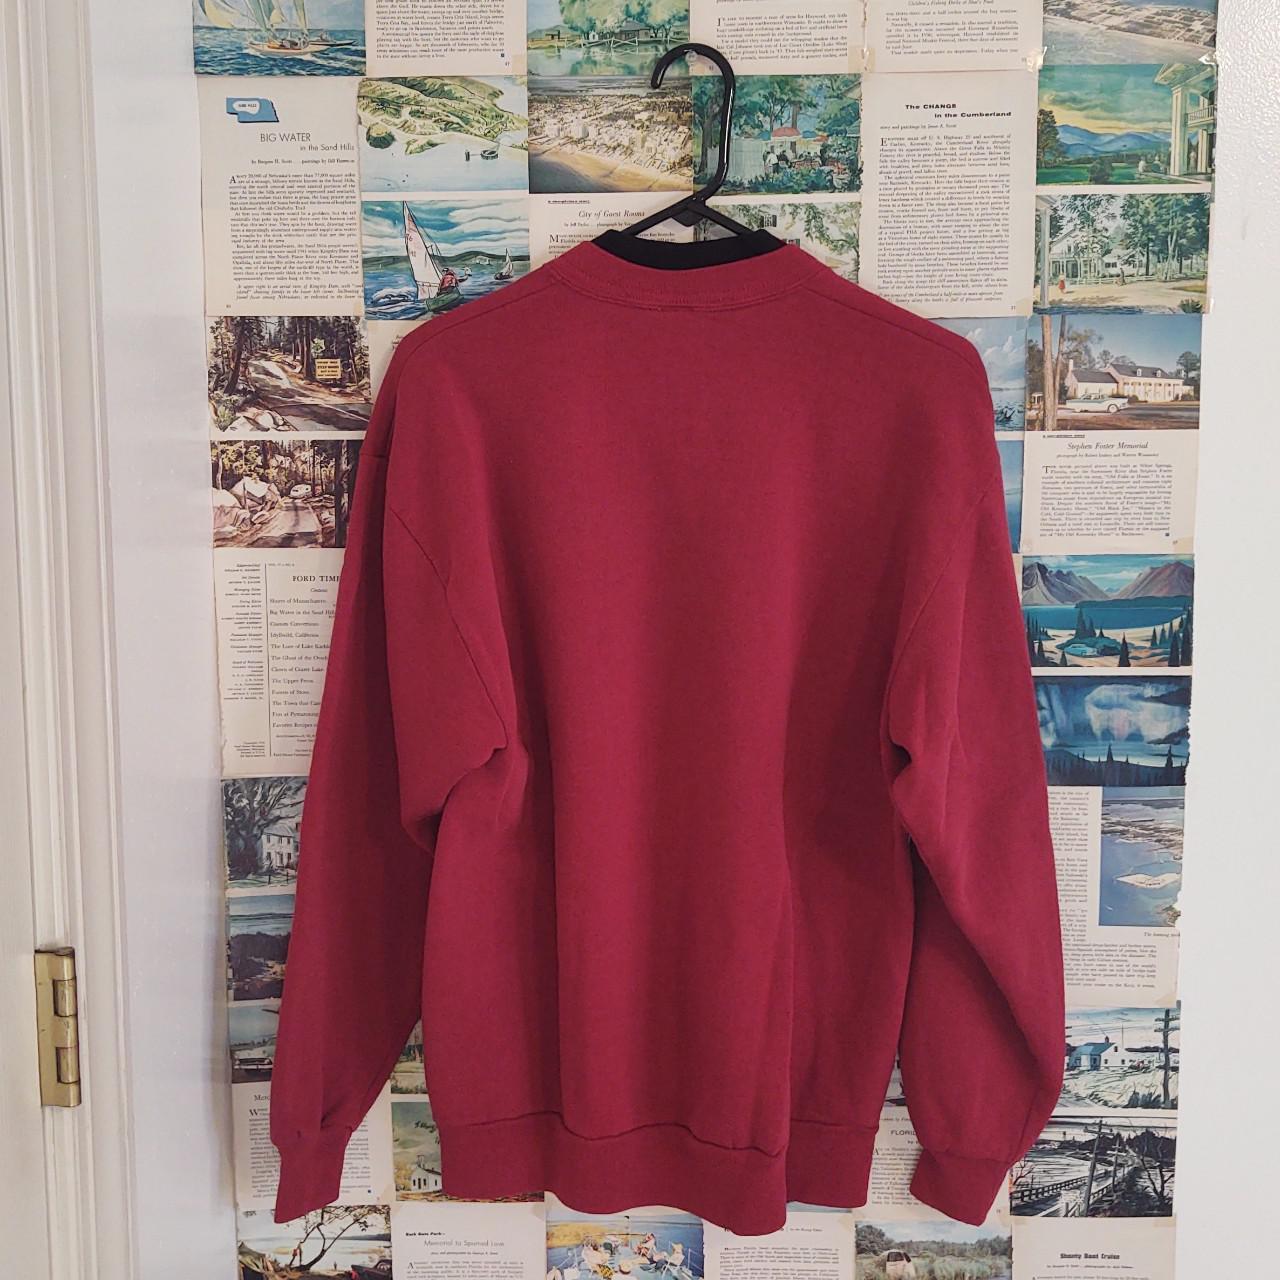 Product Image 2 - Burgundy red cardinal winter sweatshirt,